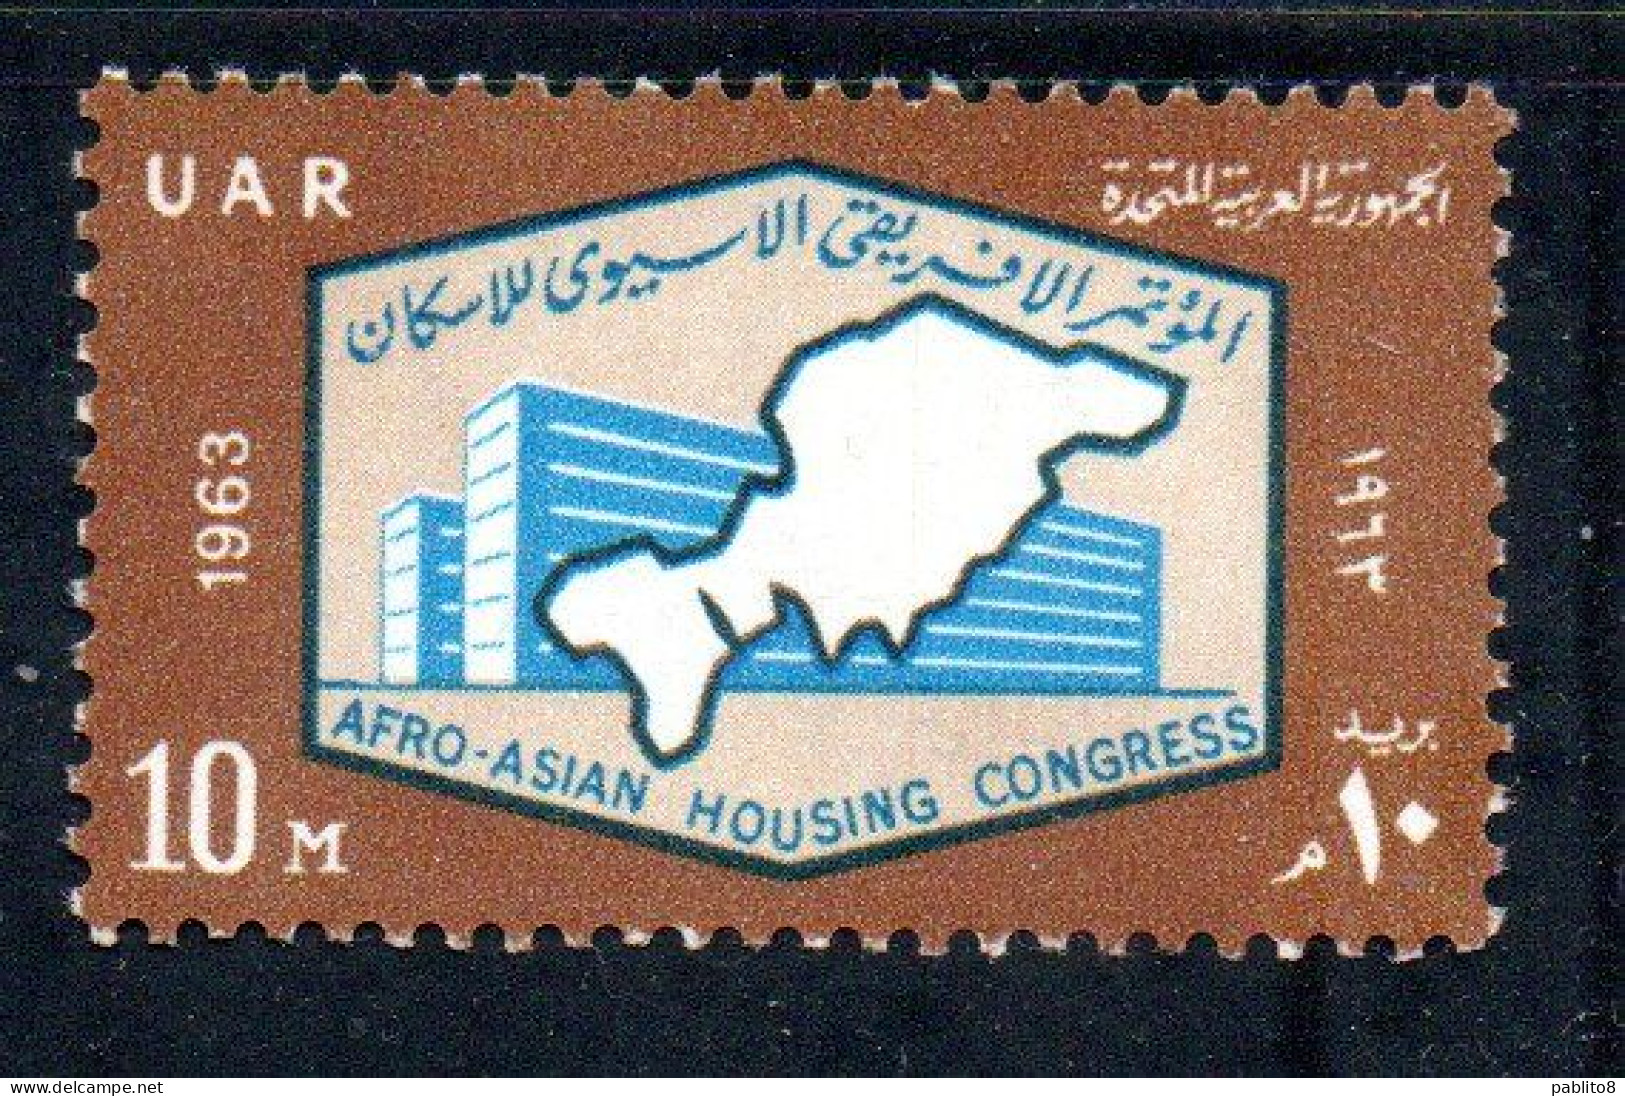 UAR EGYPT EGITTO 1963 AFRO-ASIAN HOUSING CONGRESS MODERN BUILDING AND MAP 10m MNH - Nuevos